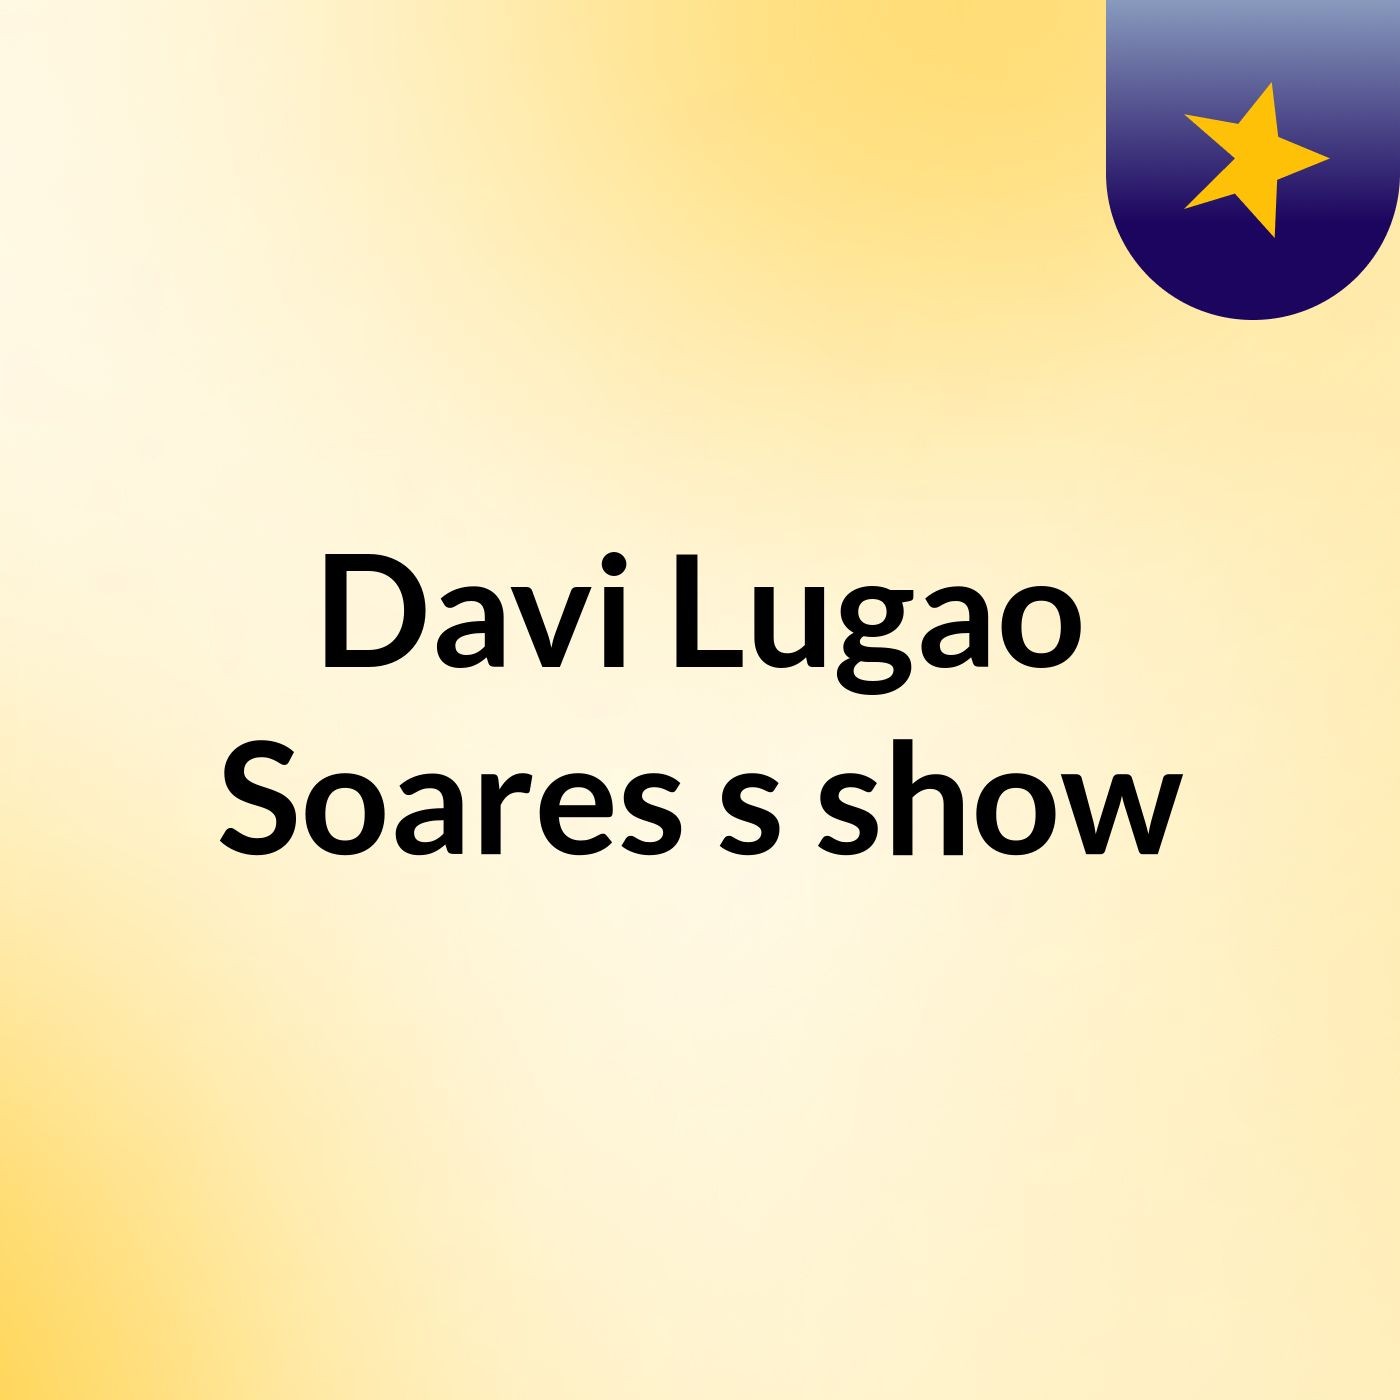 Davi Lugao Soares's show